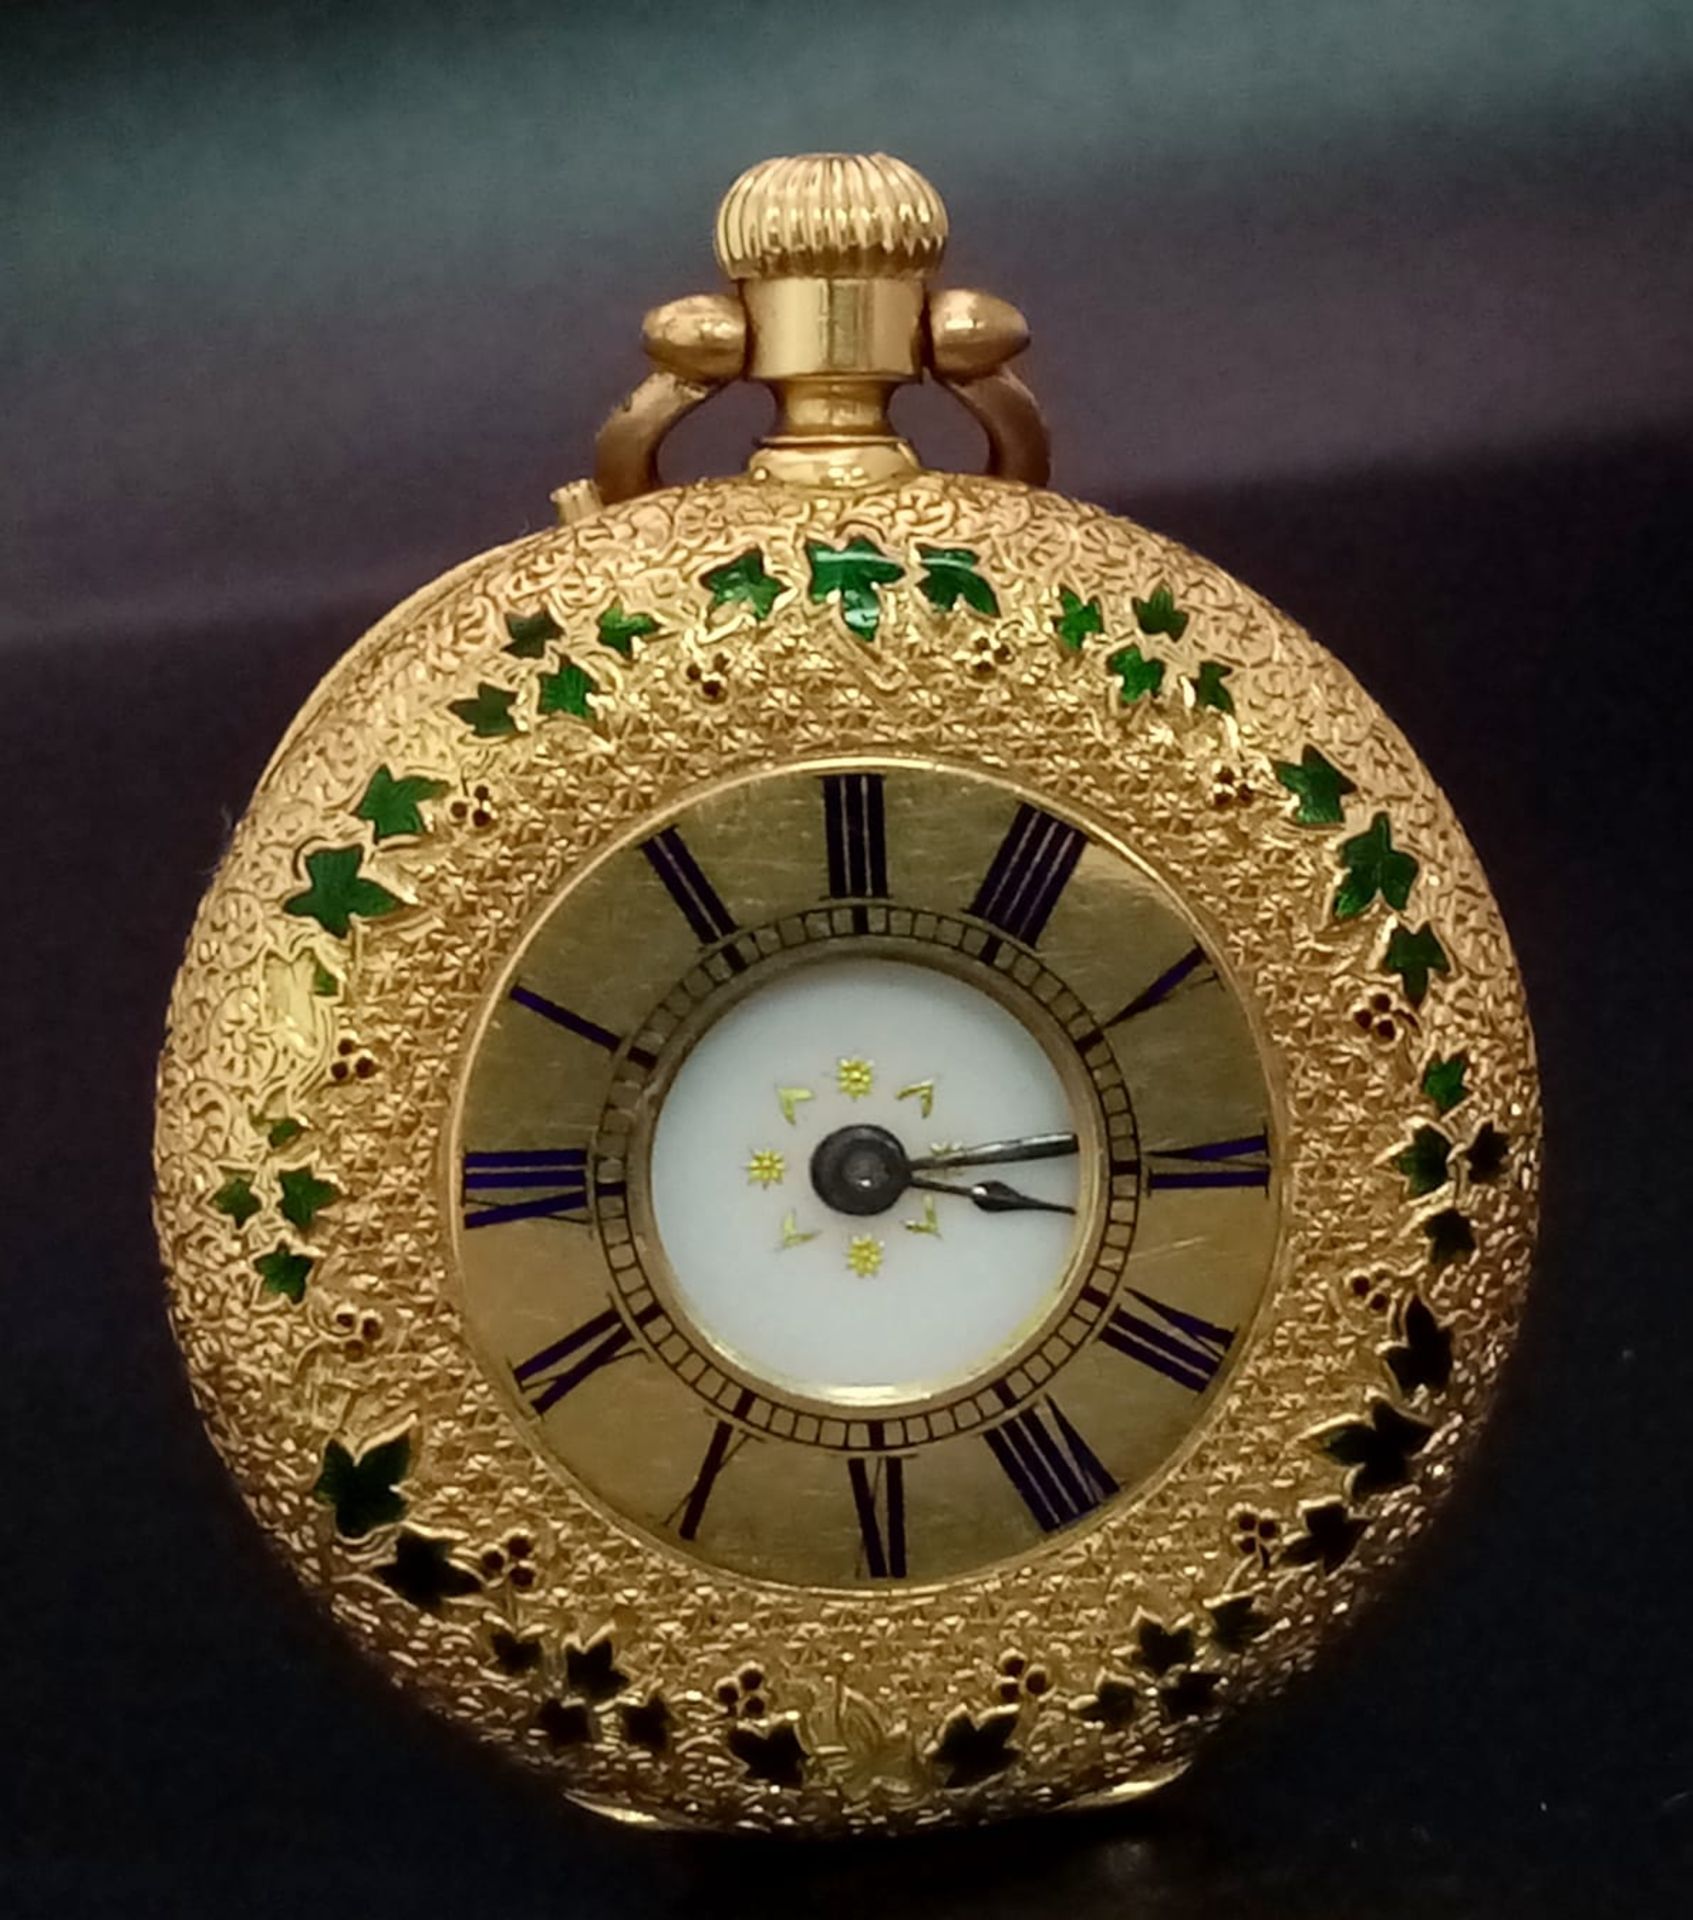 An 18K Gold Half Hunter Pocket Watch with green enamel foilage decoration. 35mm diameter, white dial